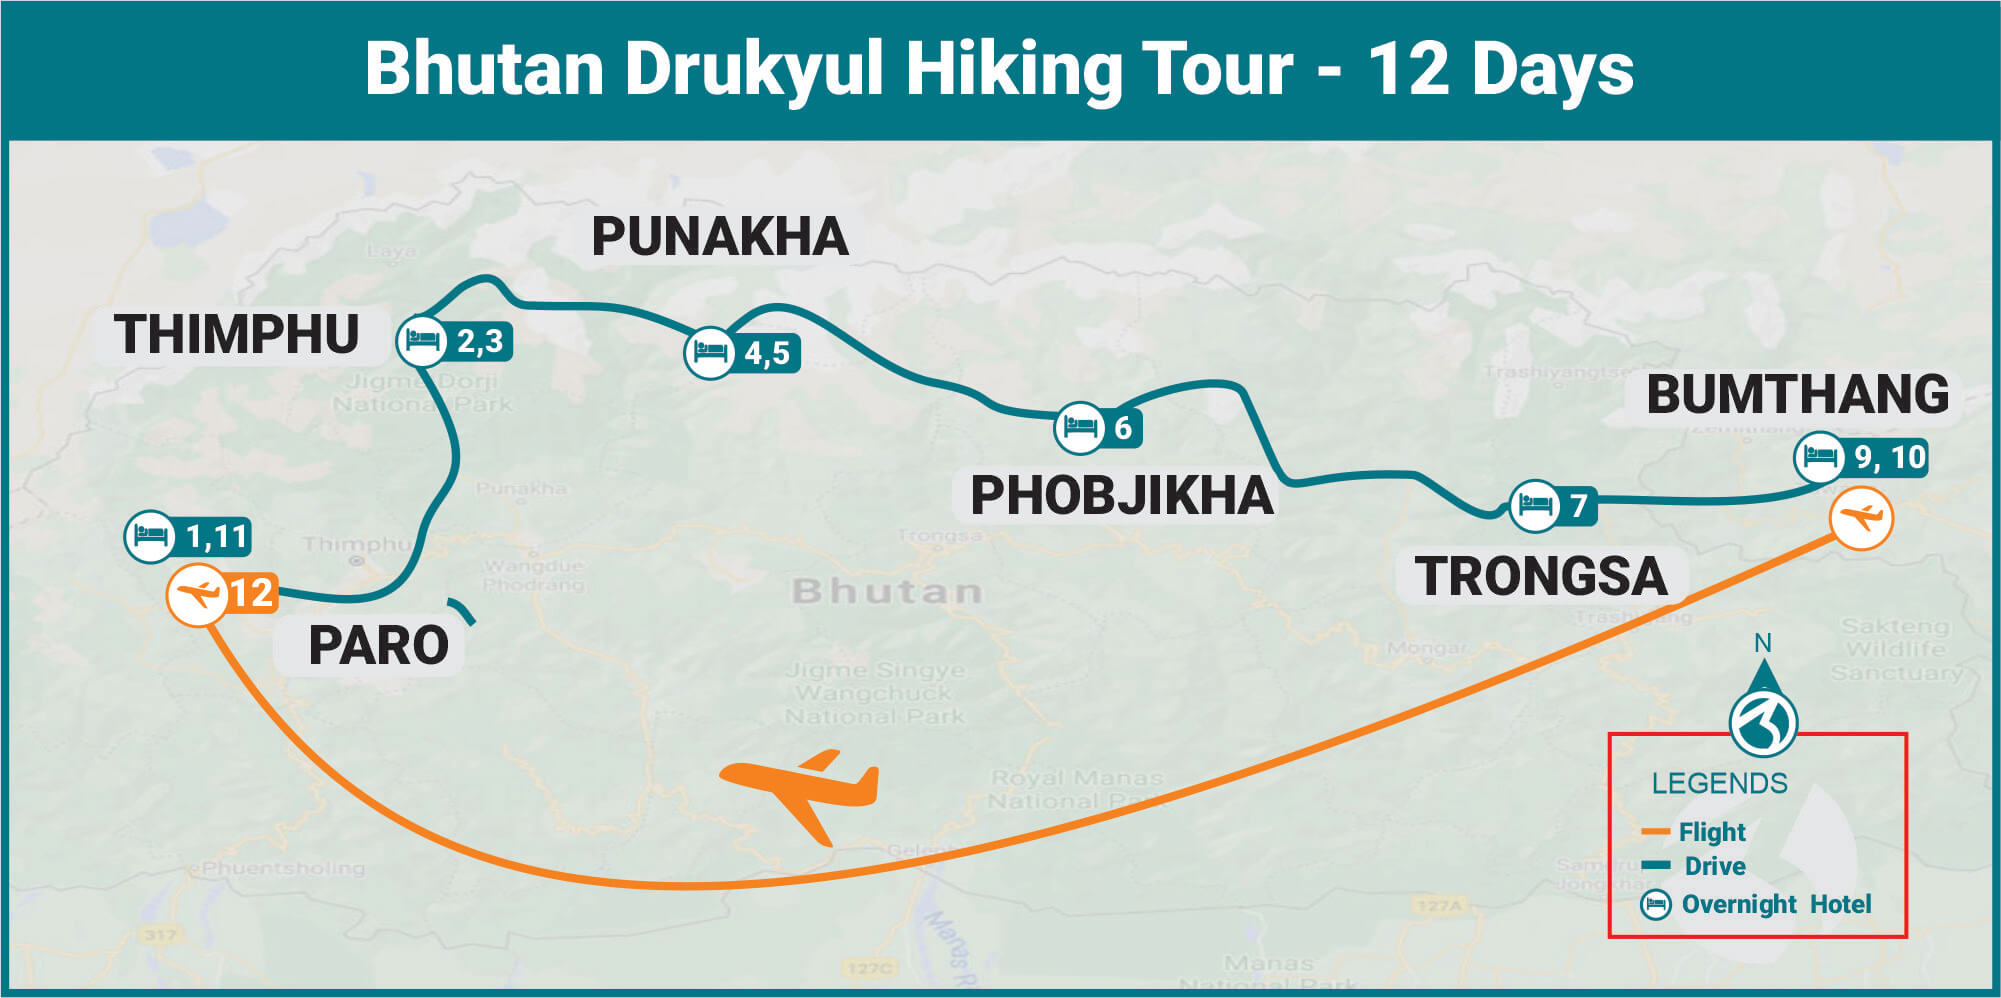 Bhutan Drukyul Hiking Tour 12 Days Route map